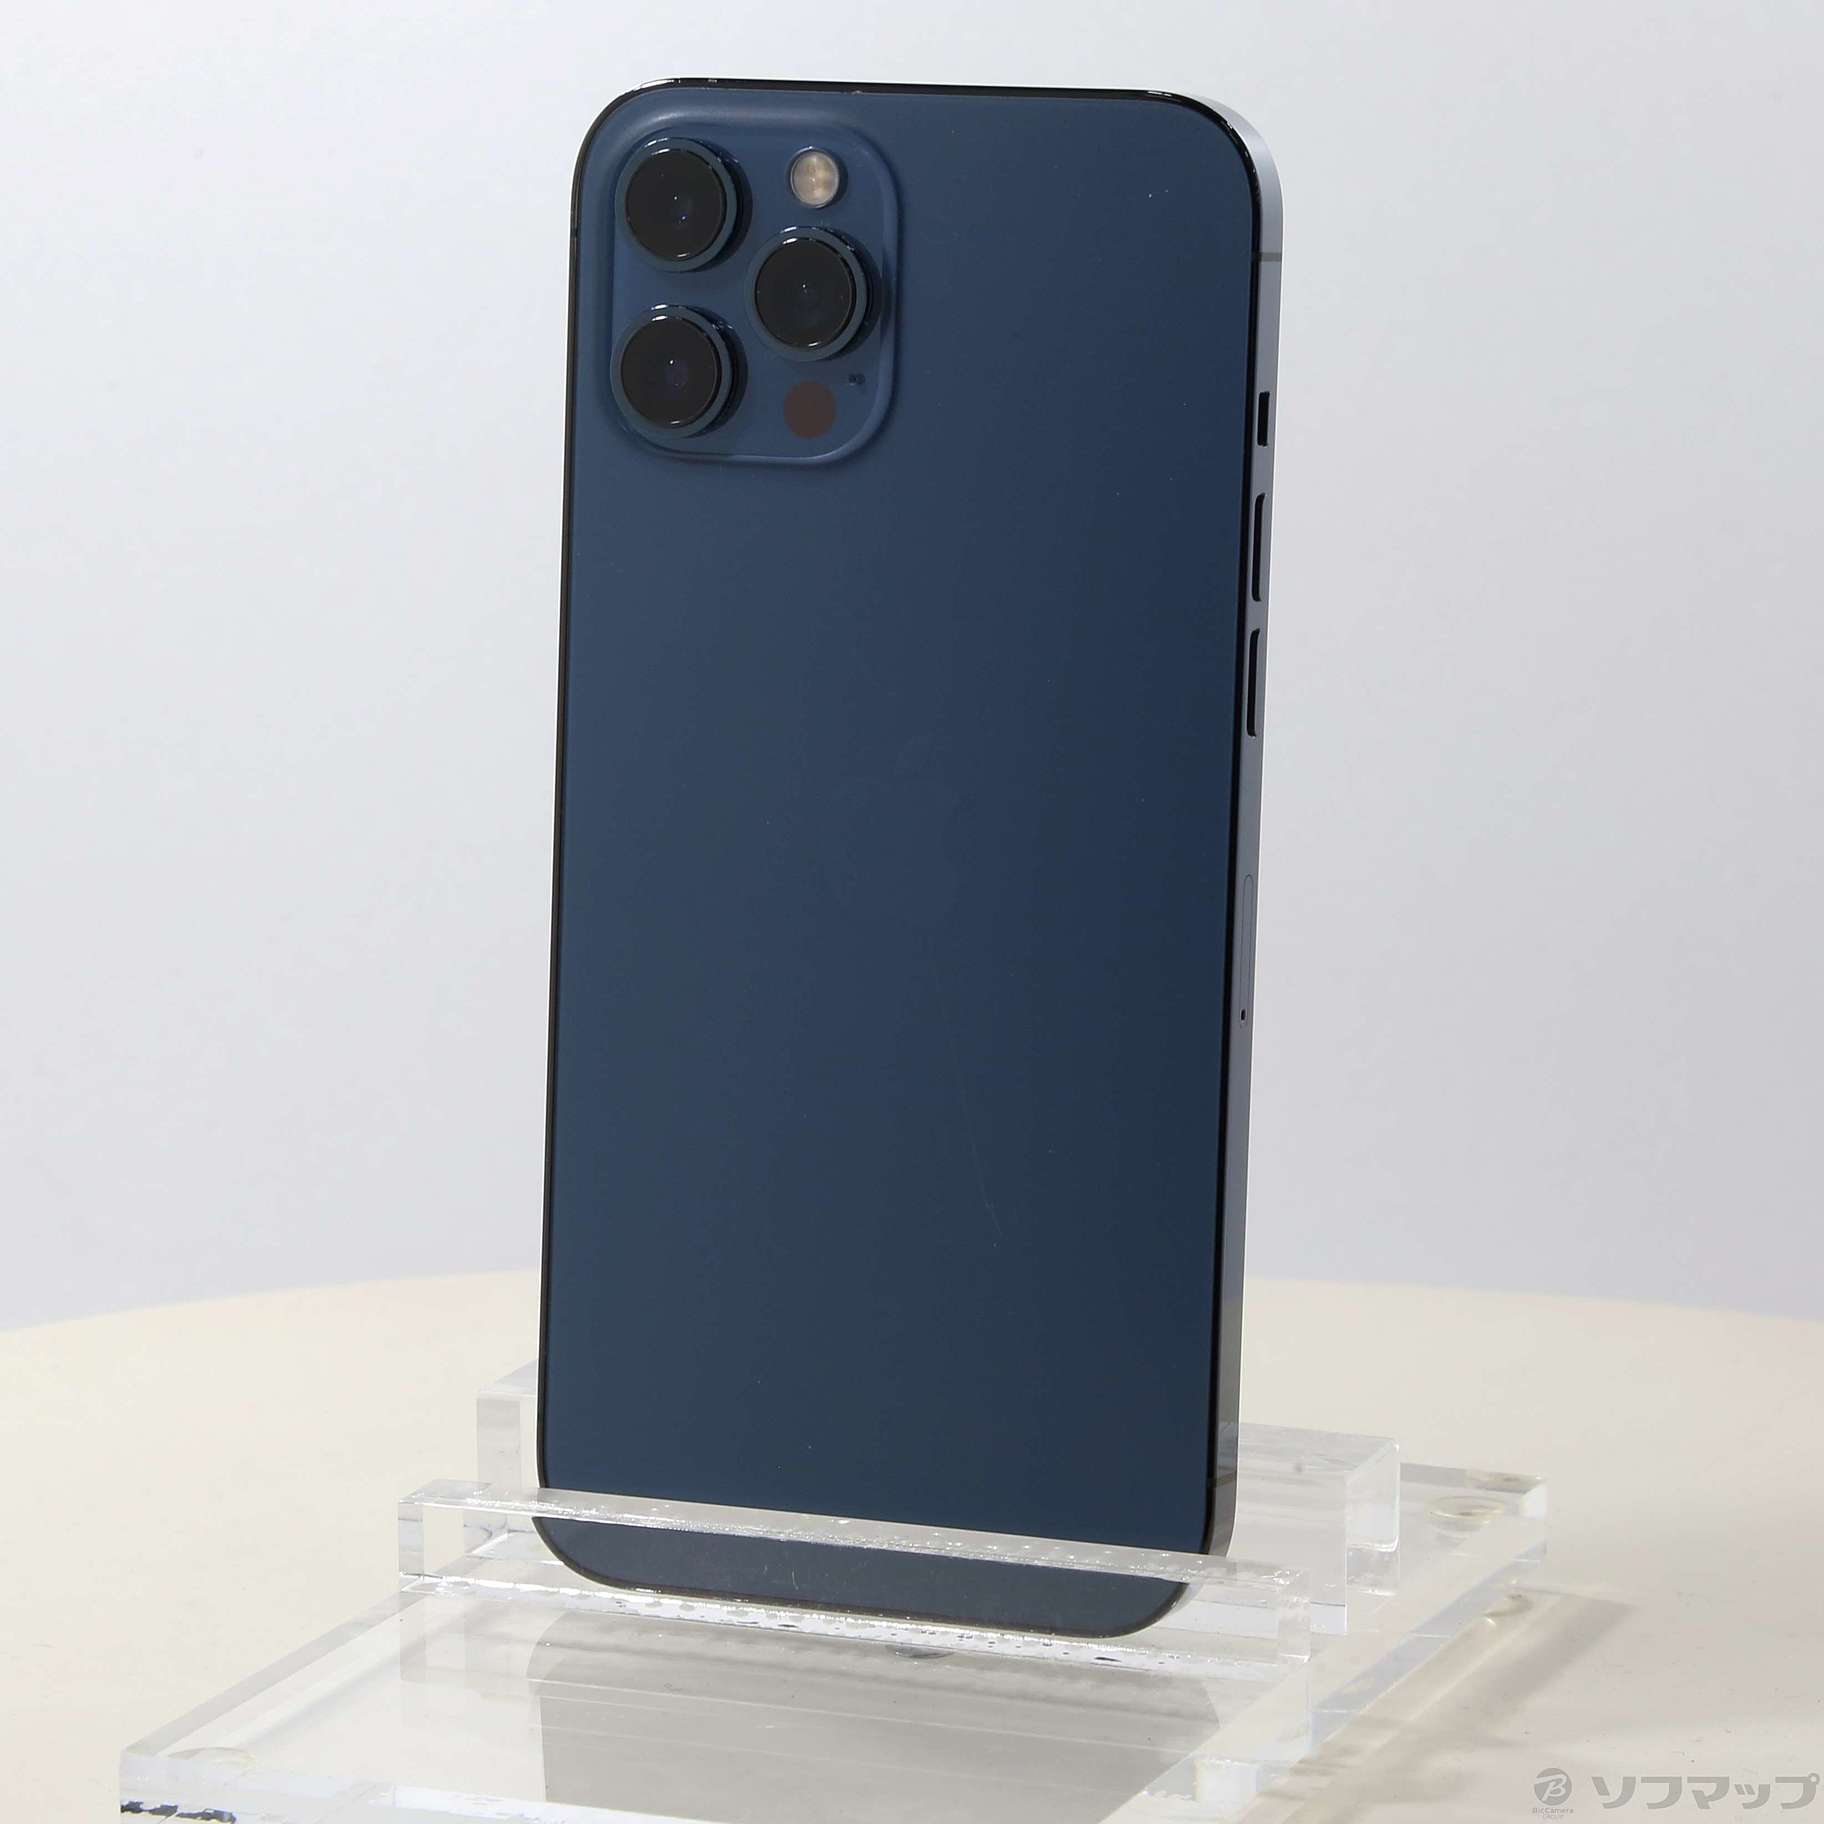 iPhone 12 Pro Max 256GB SIMフリー パシフィックブルー